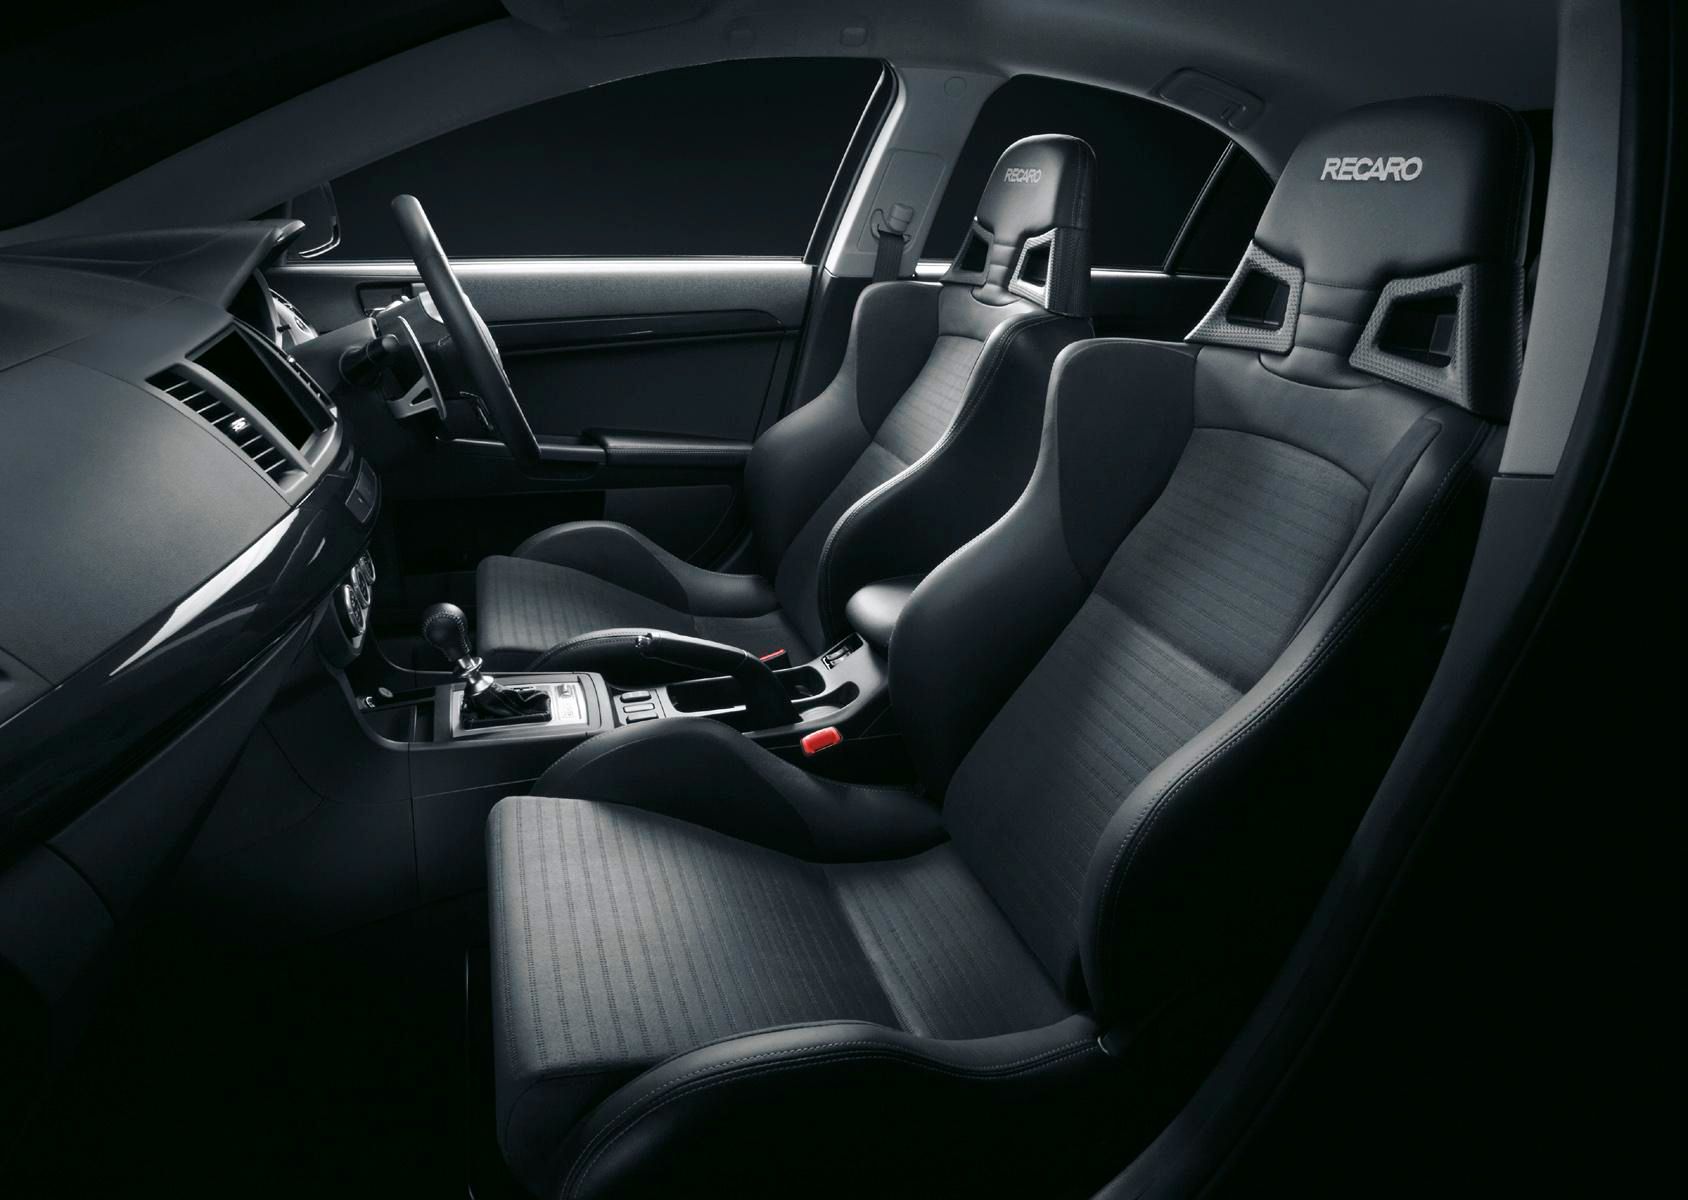 Lancer Evolution X Leather Seats